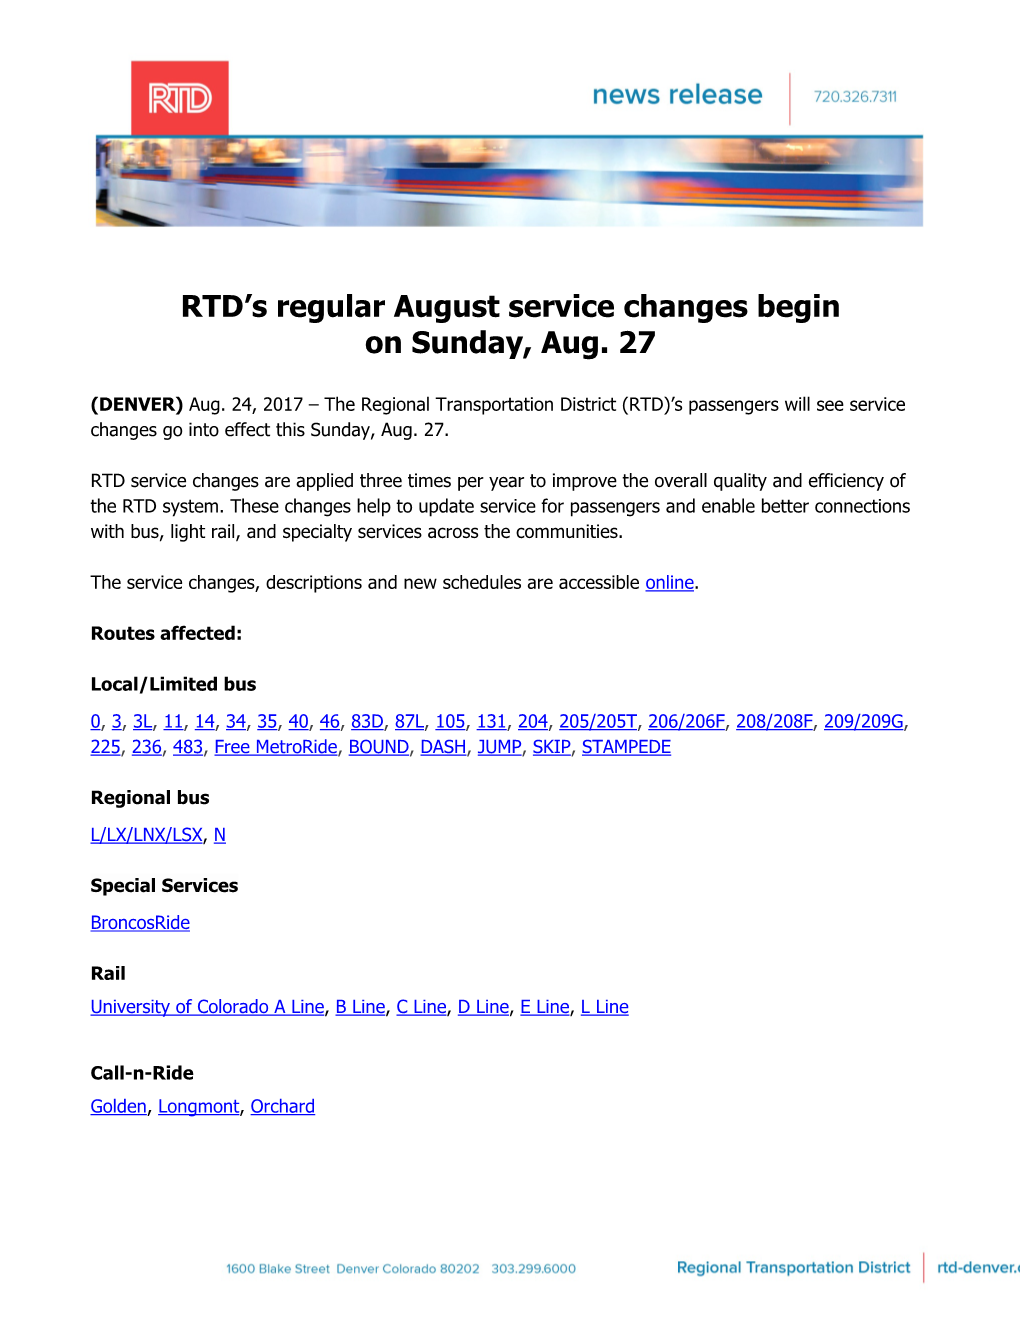 RTD's Regular August Service Changes Begin on Sunday, Aug. 27